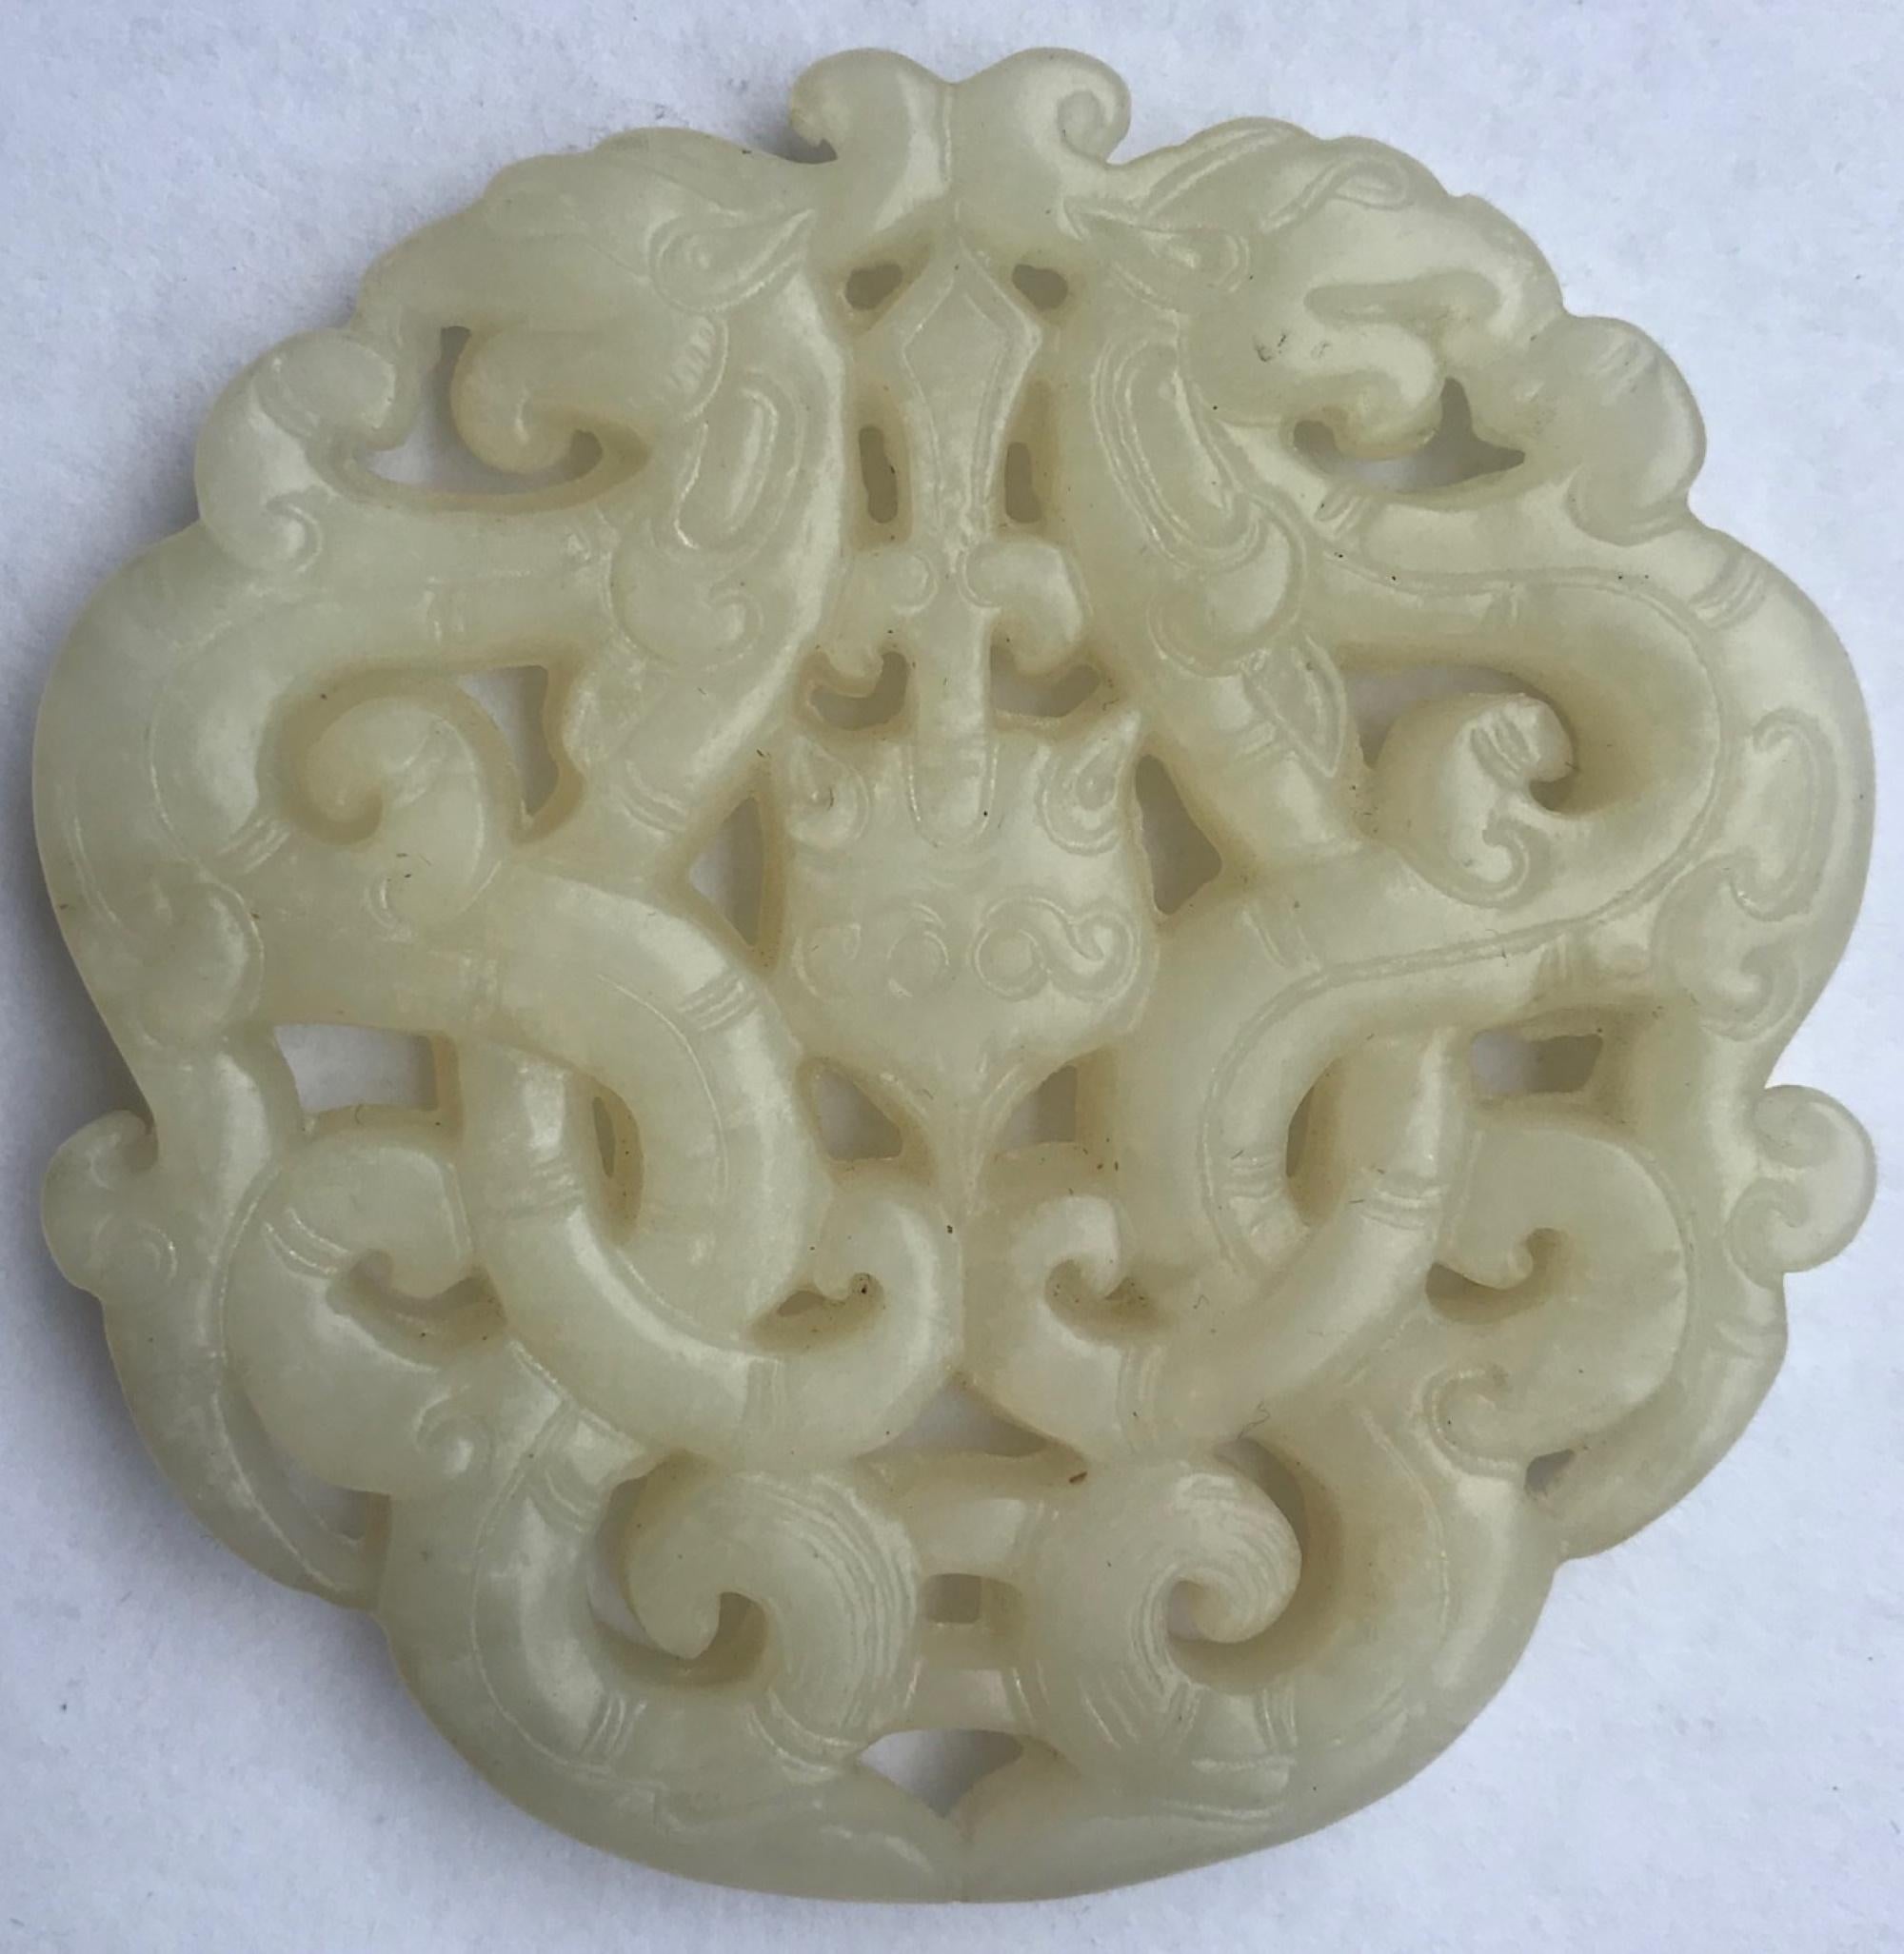 jade carving qing dynasty